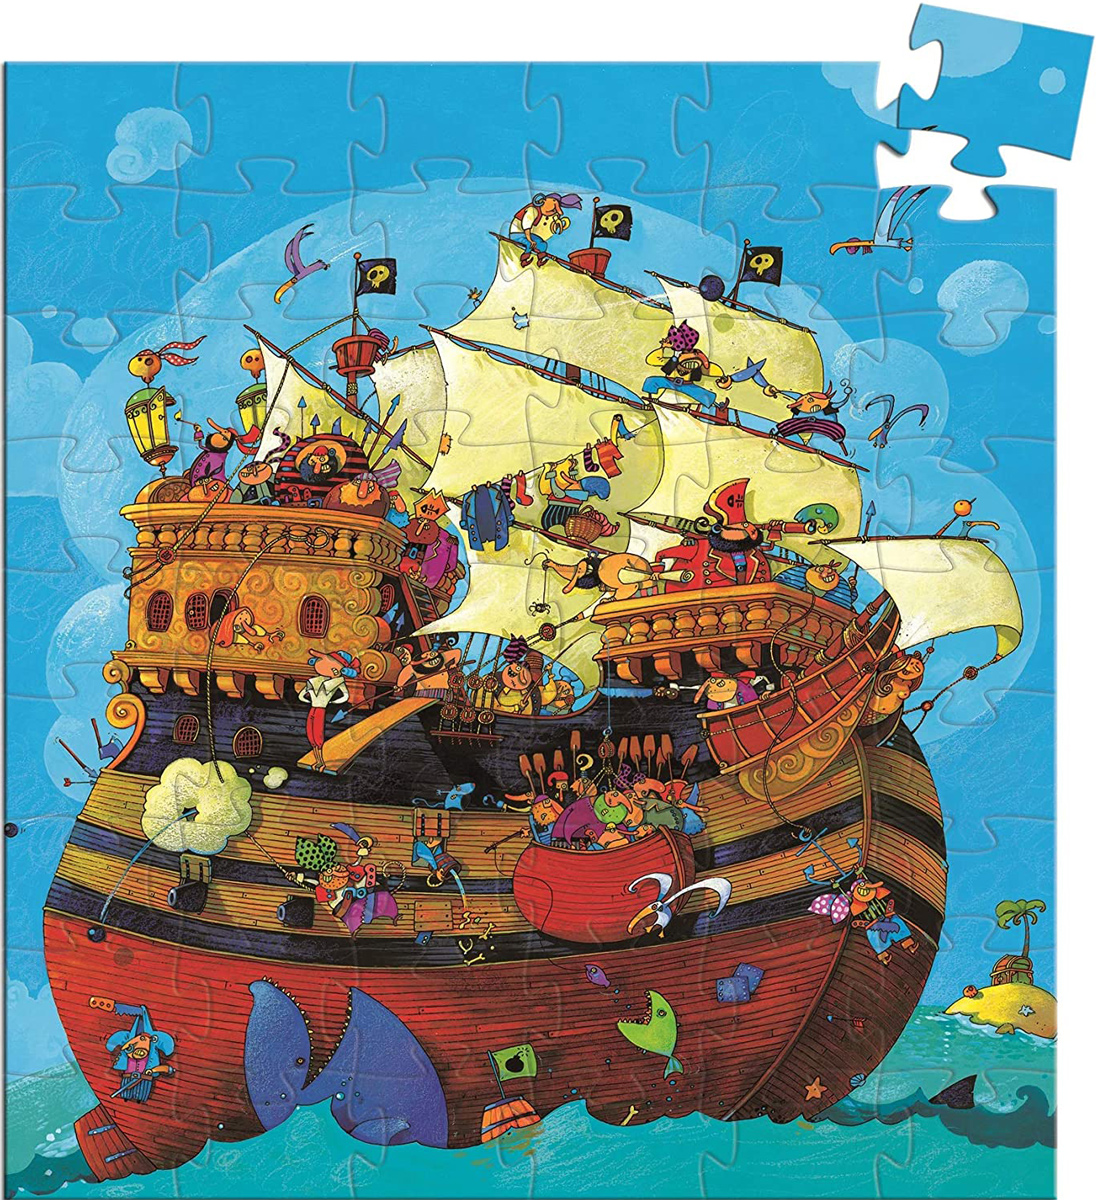 Puzzle 54 piese - Corabia Barbarossa | Djeco